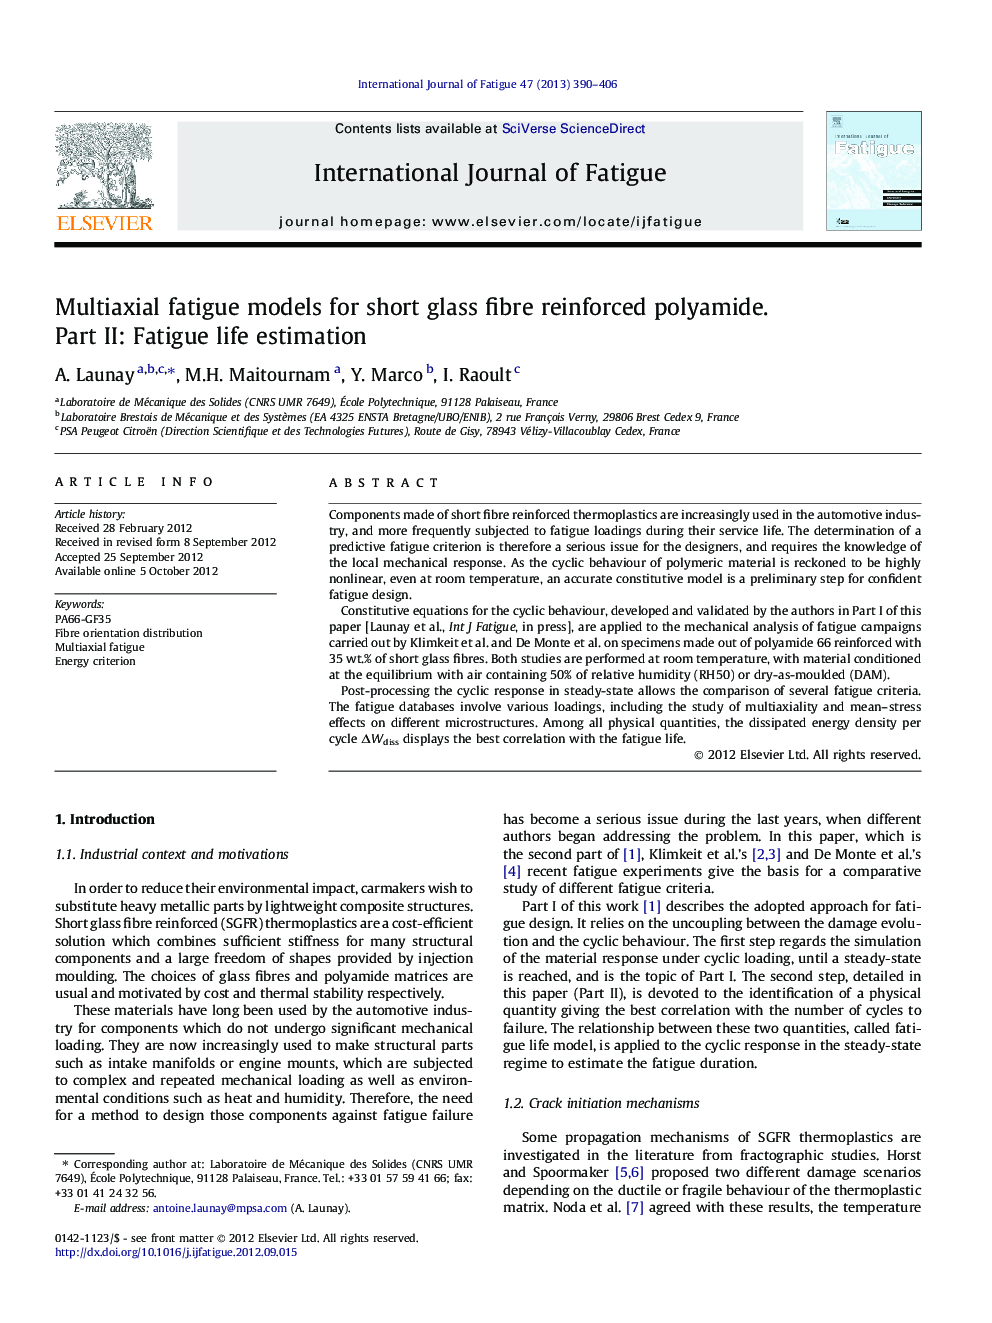 Multiaxial fatigue models for short glass fibre reinforced polyamide. Part II: Fatigue life estimation